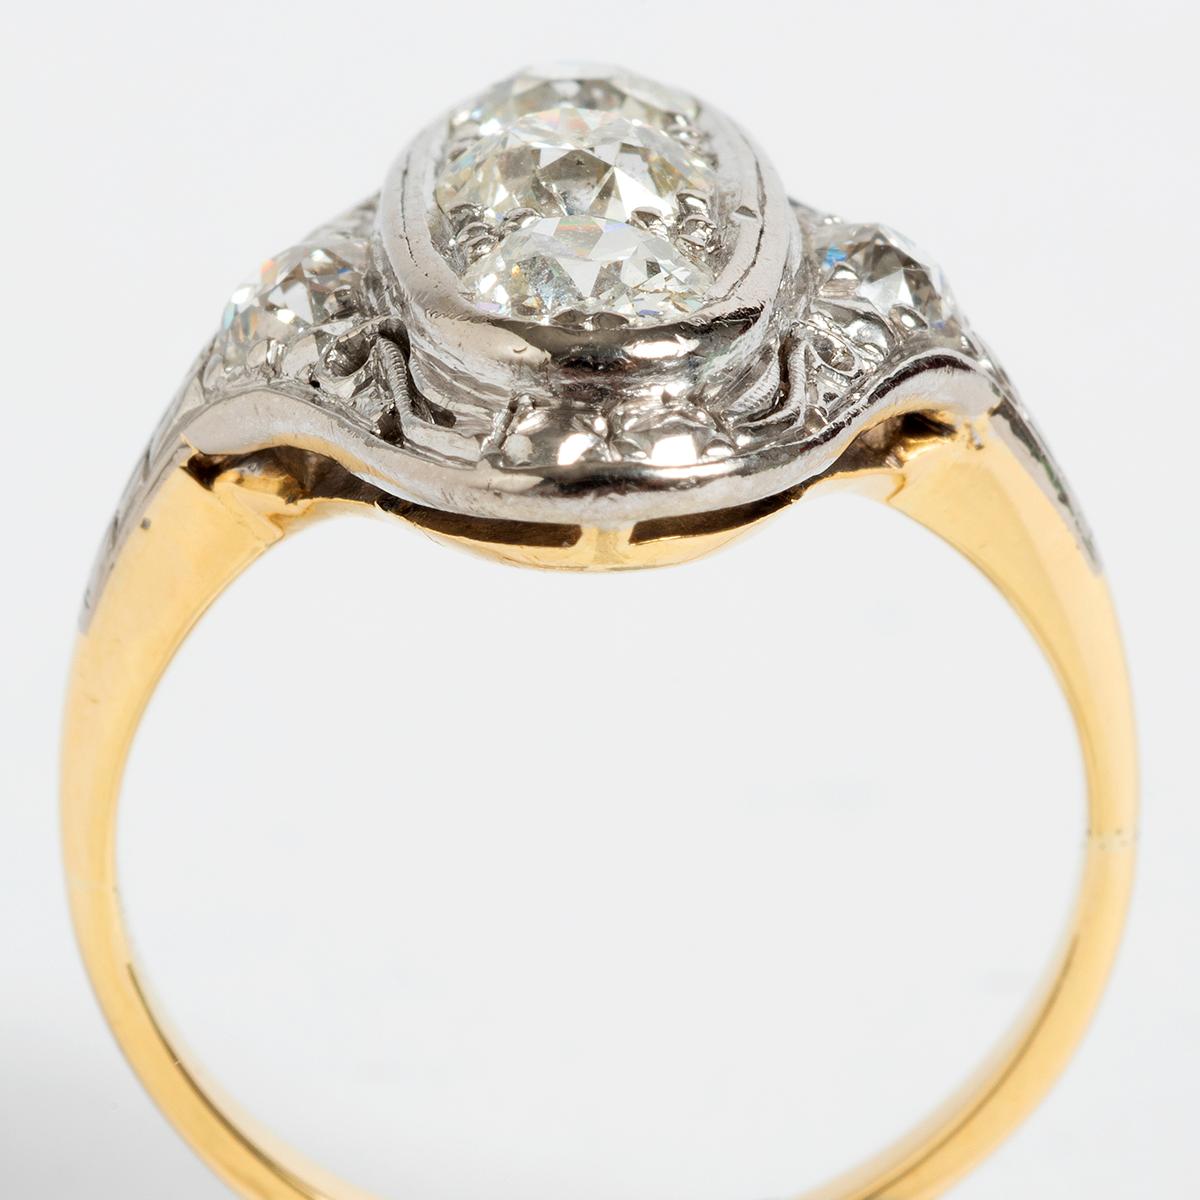 Mixed Cut Victorian Cut Diamond (est 1.00ct, surround est .36ct) Cluster Ring, H/si. 1890. For Sale